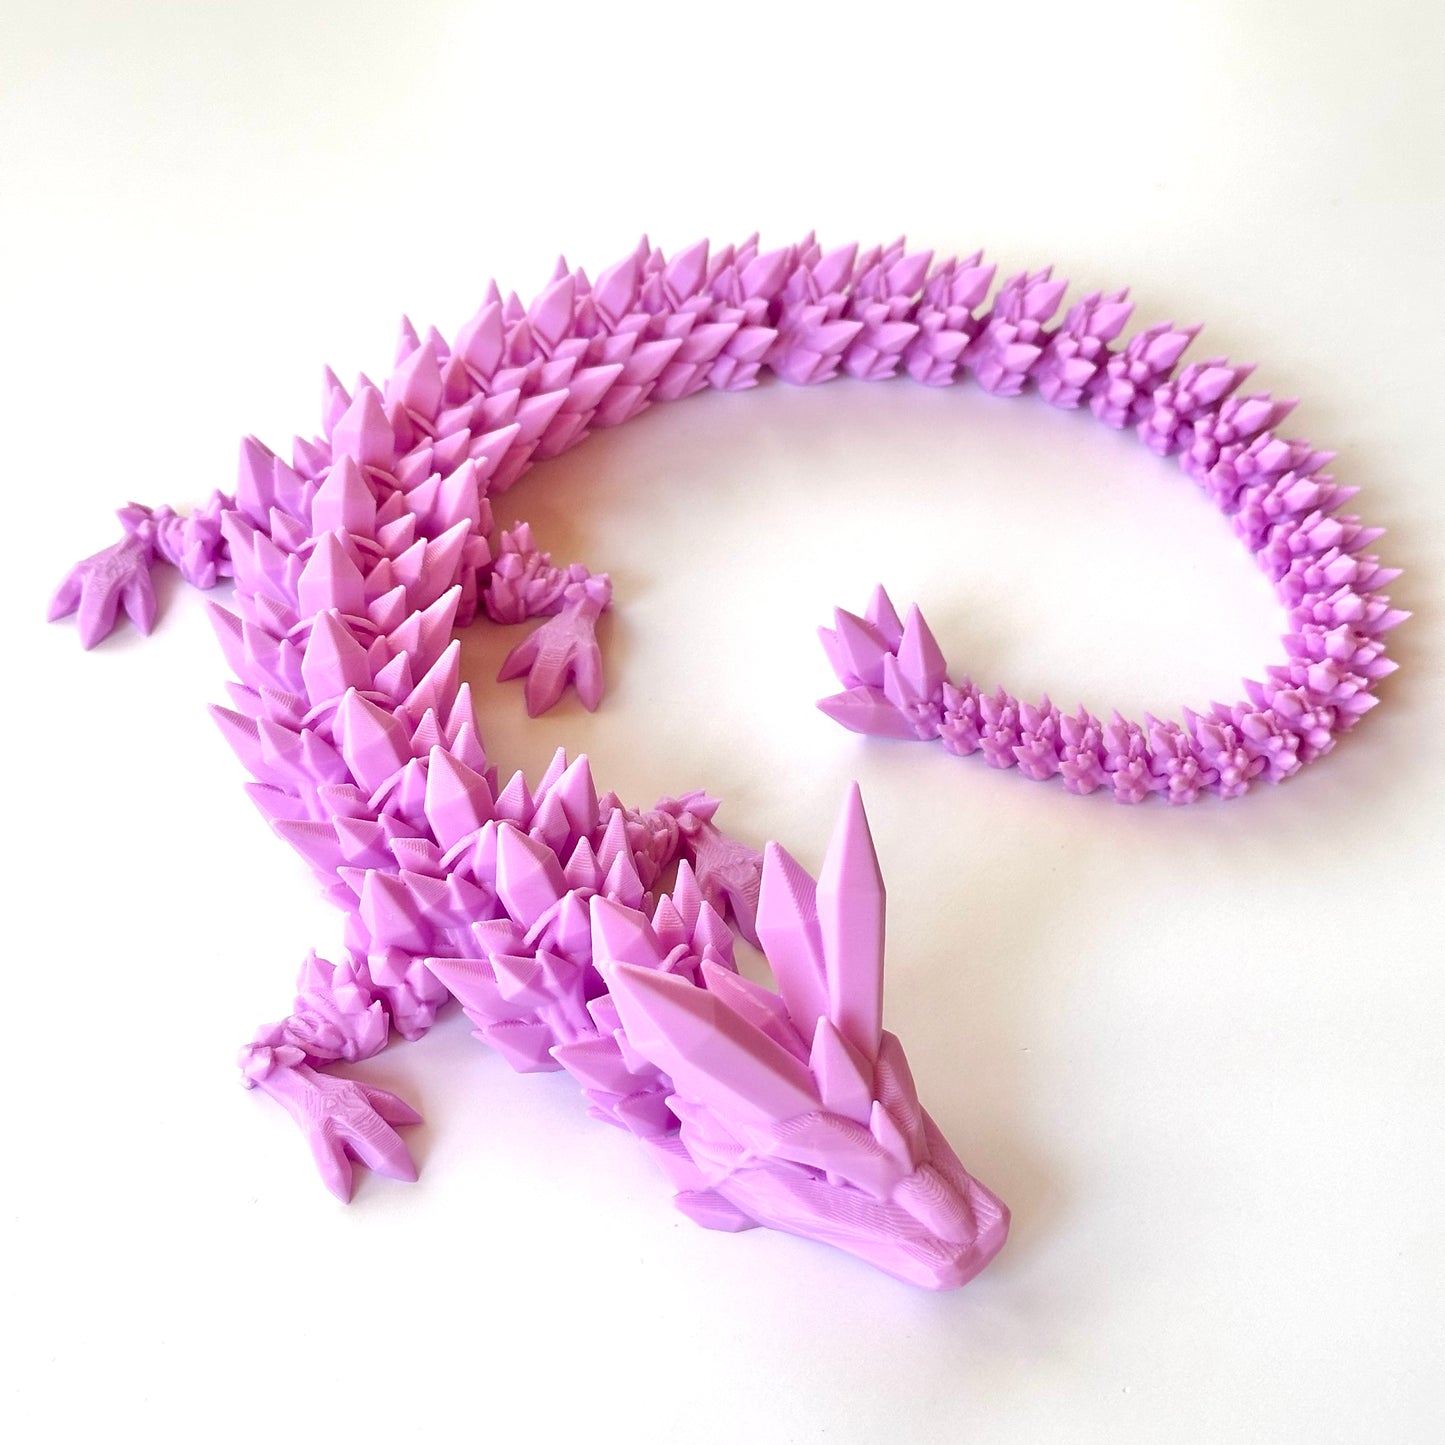 Large Crystal Dragons - 3D Printed Articulating